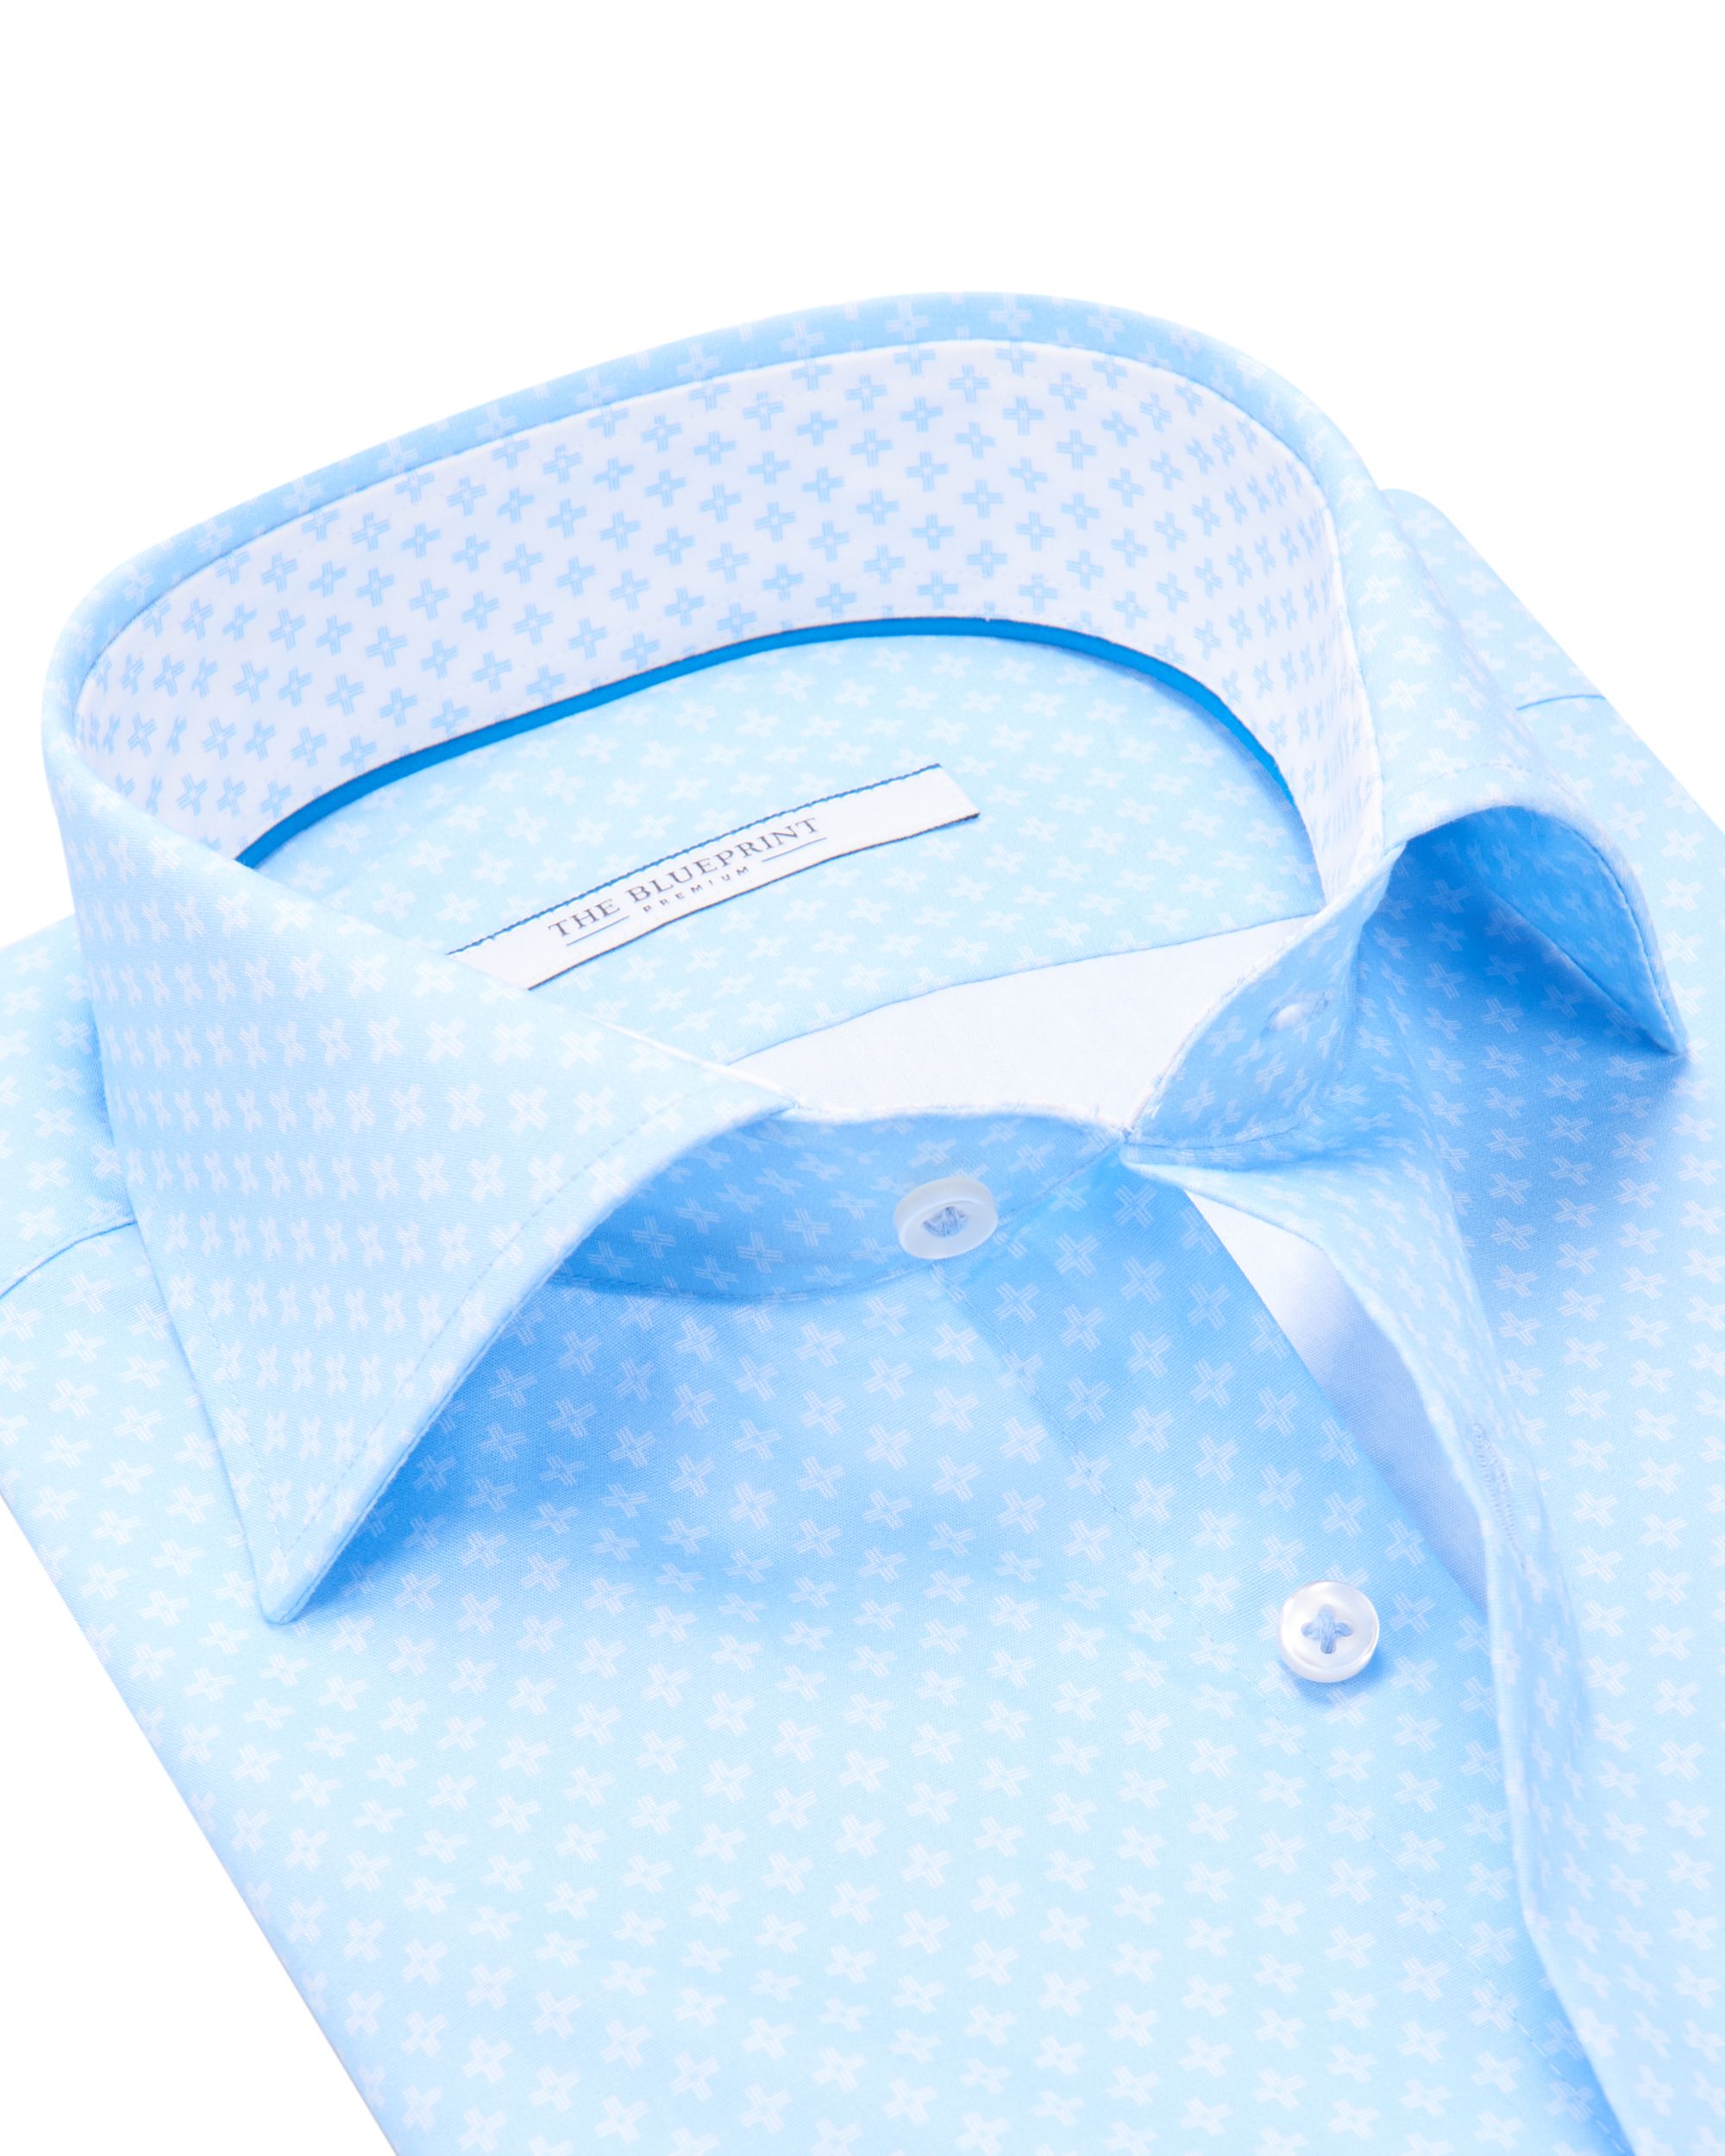 The BLUEPRINT Premium Casual Overhemd LM Blauw dessin 082256-001-L